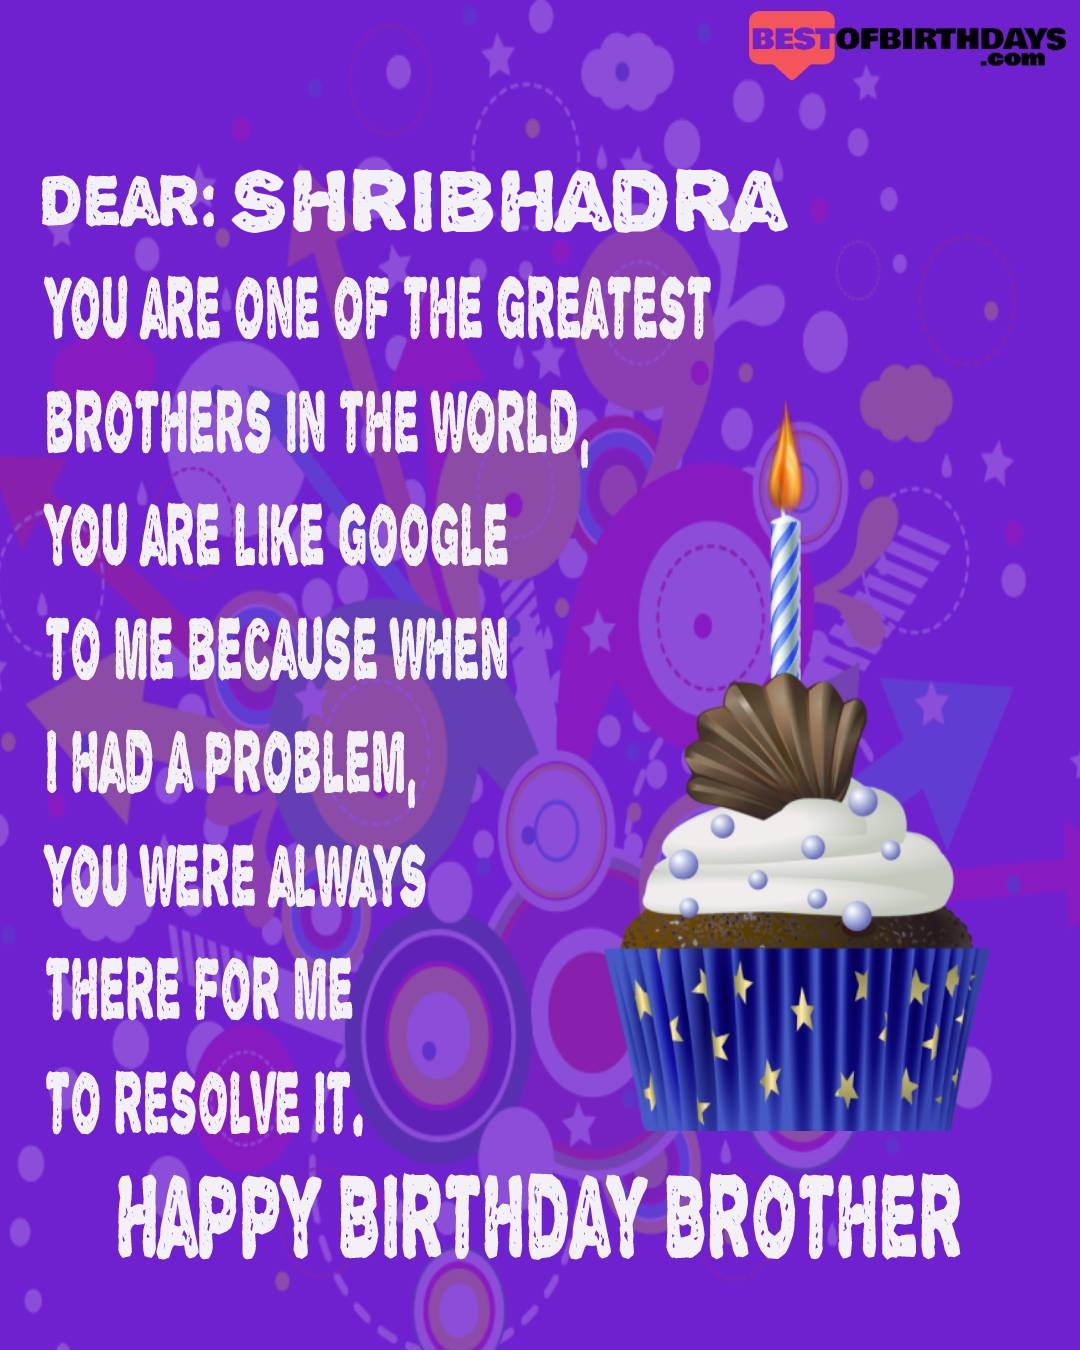 Happy birthday shribhadra bhai brother bro